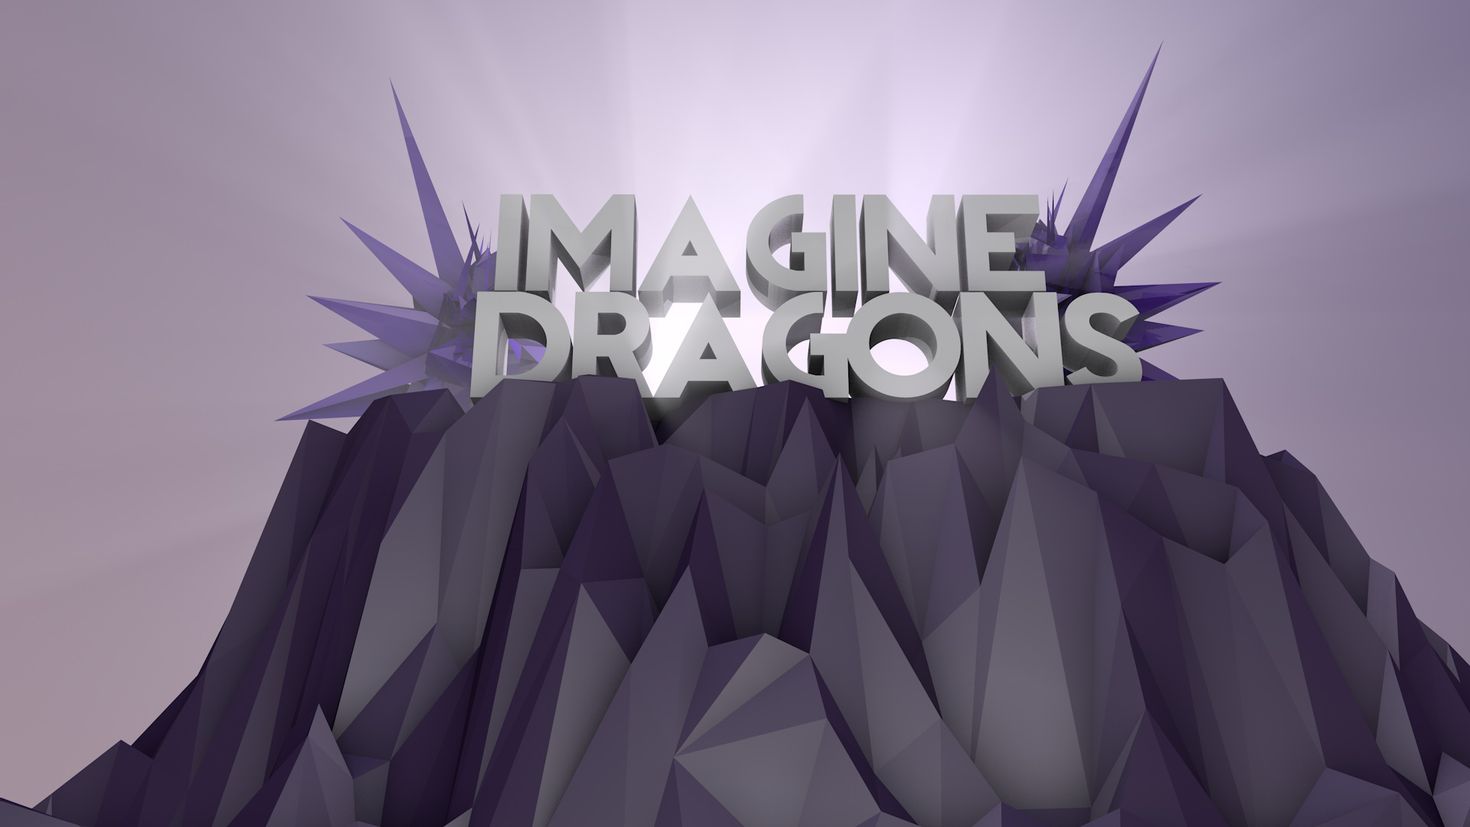 Might imagine. Imagine Dragons. Imagine Dragons обои. Imagine Dragons обои на рабочий стол 1920х1080. Imagine Dragons логотип.